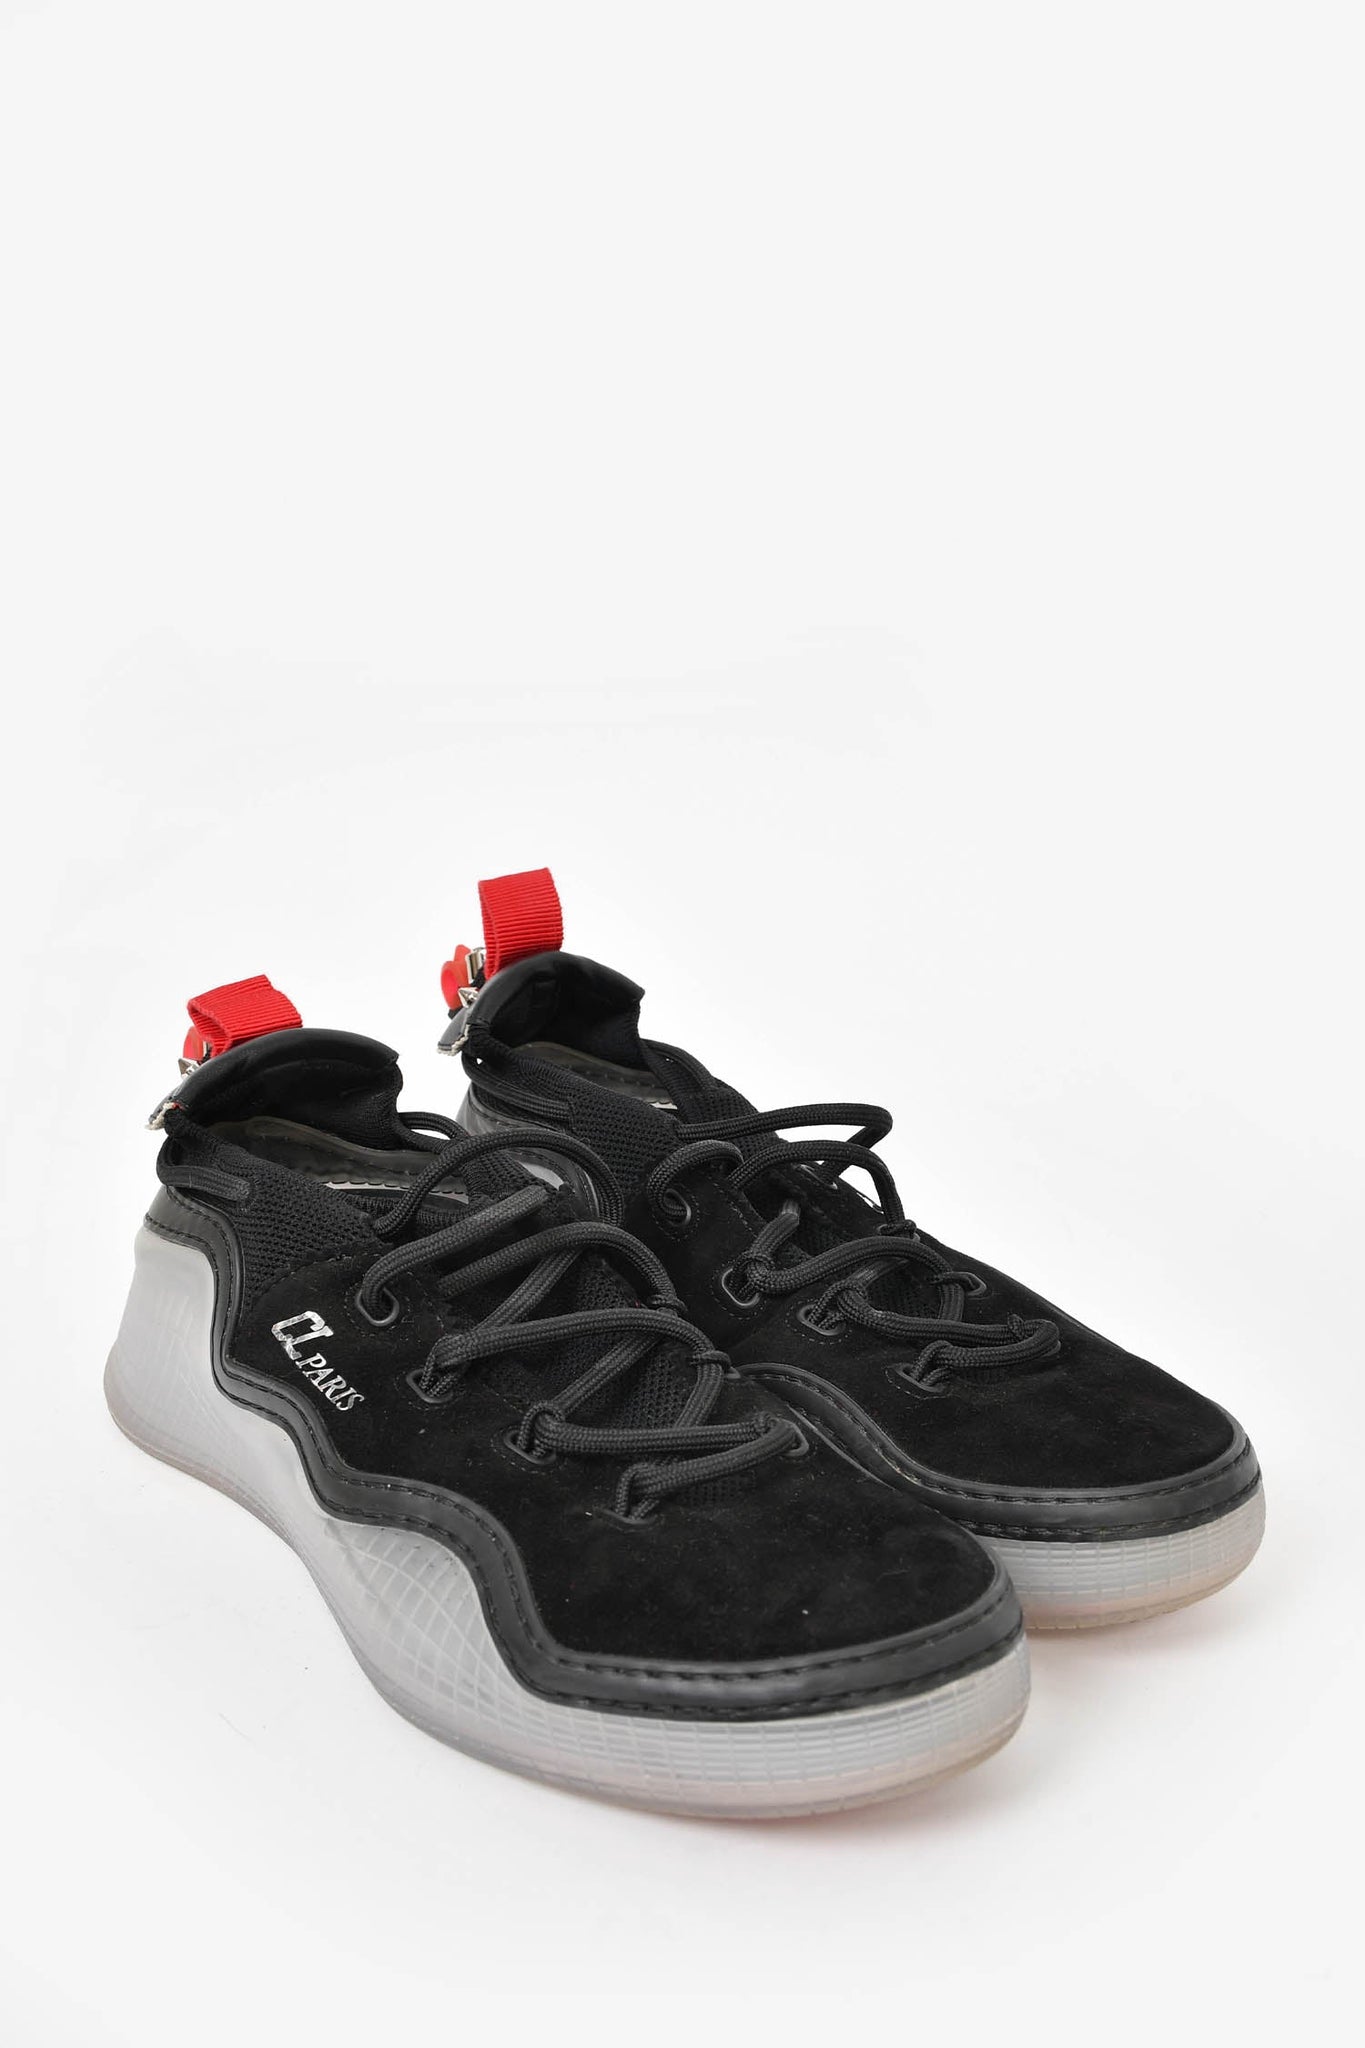 Christian Louboutin Black Mesh Arpoador Sneakers Size 40.5 Mens